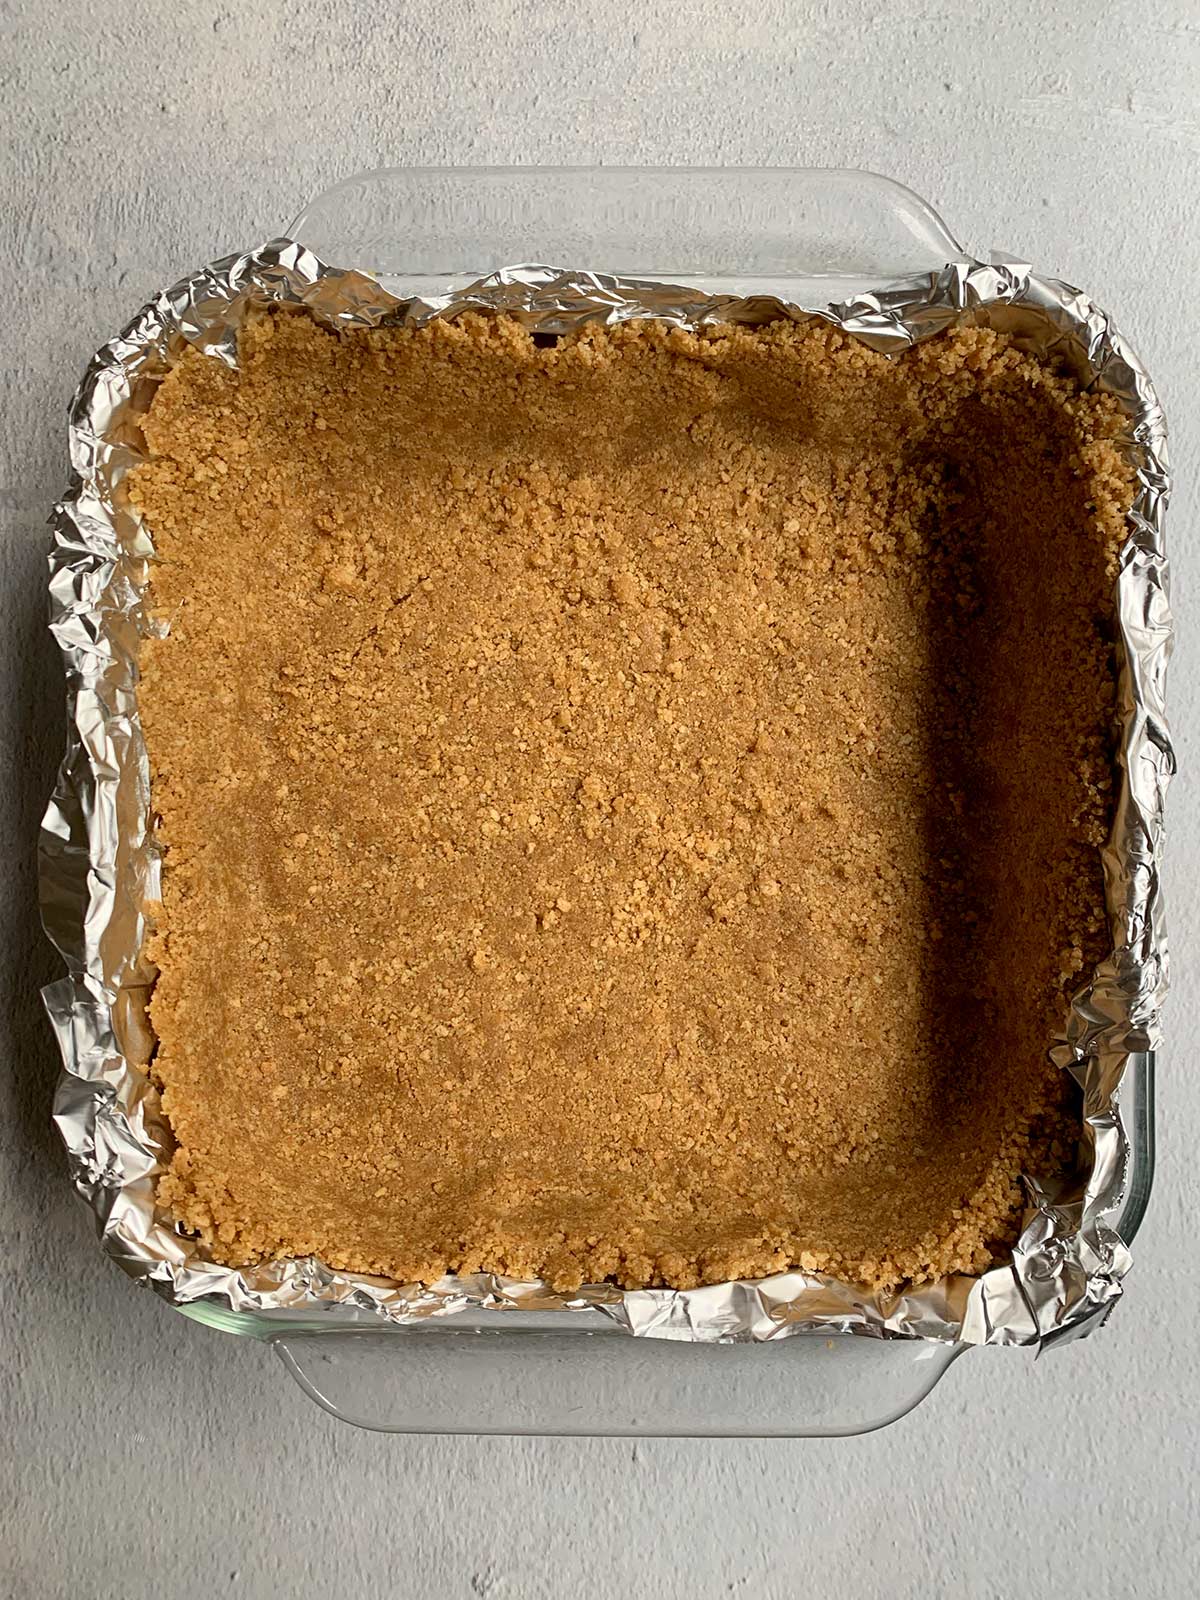 Graham cracker crust in foil-lined pan.